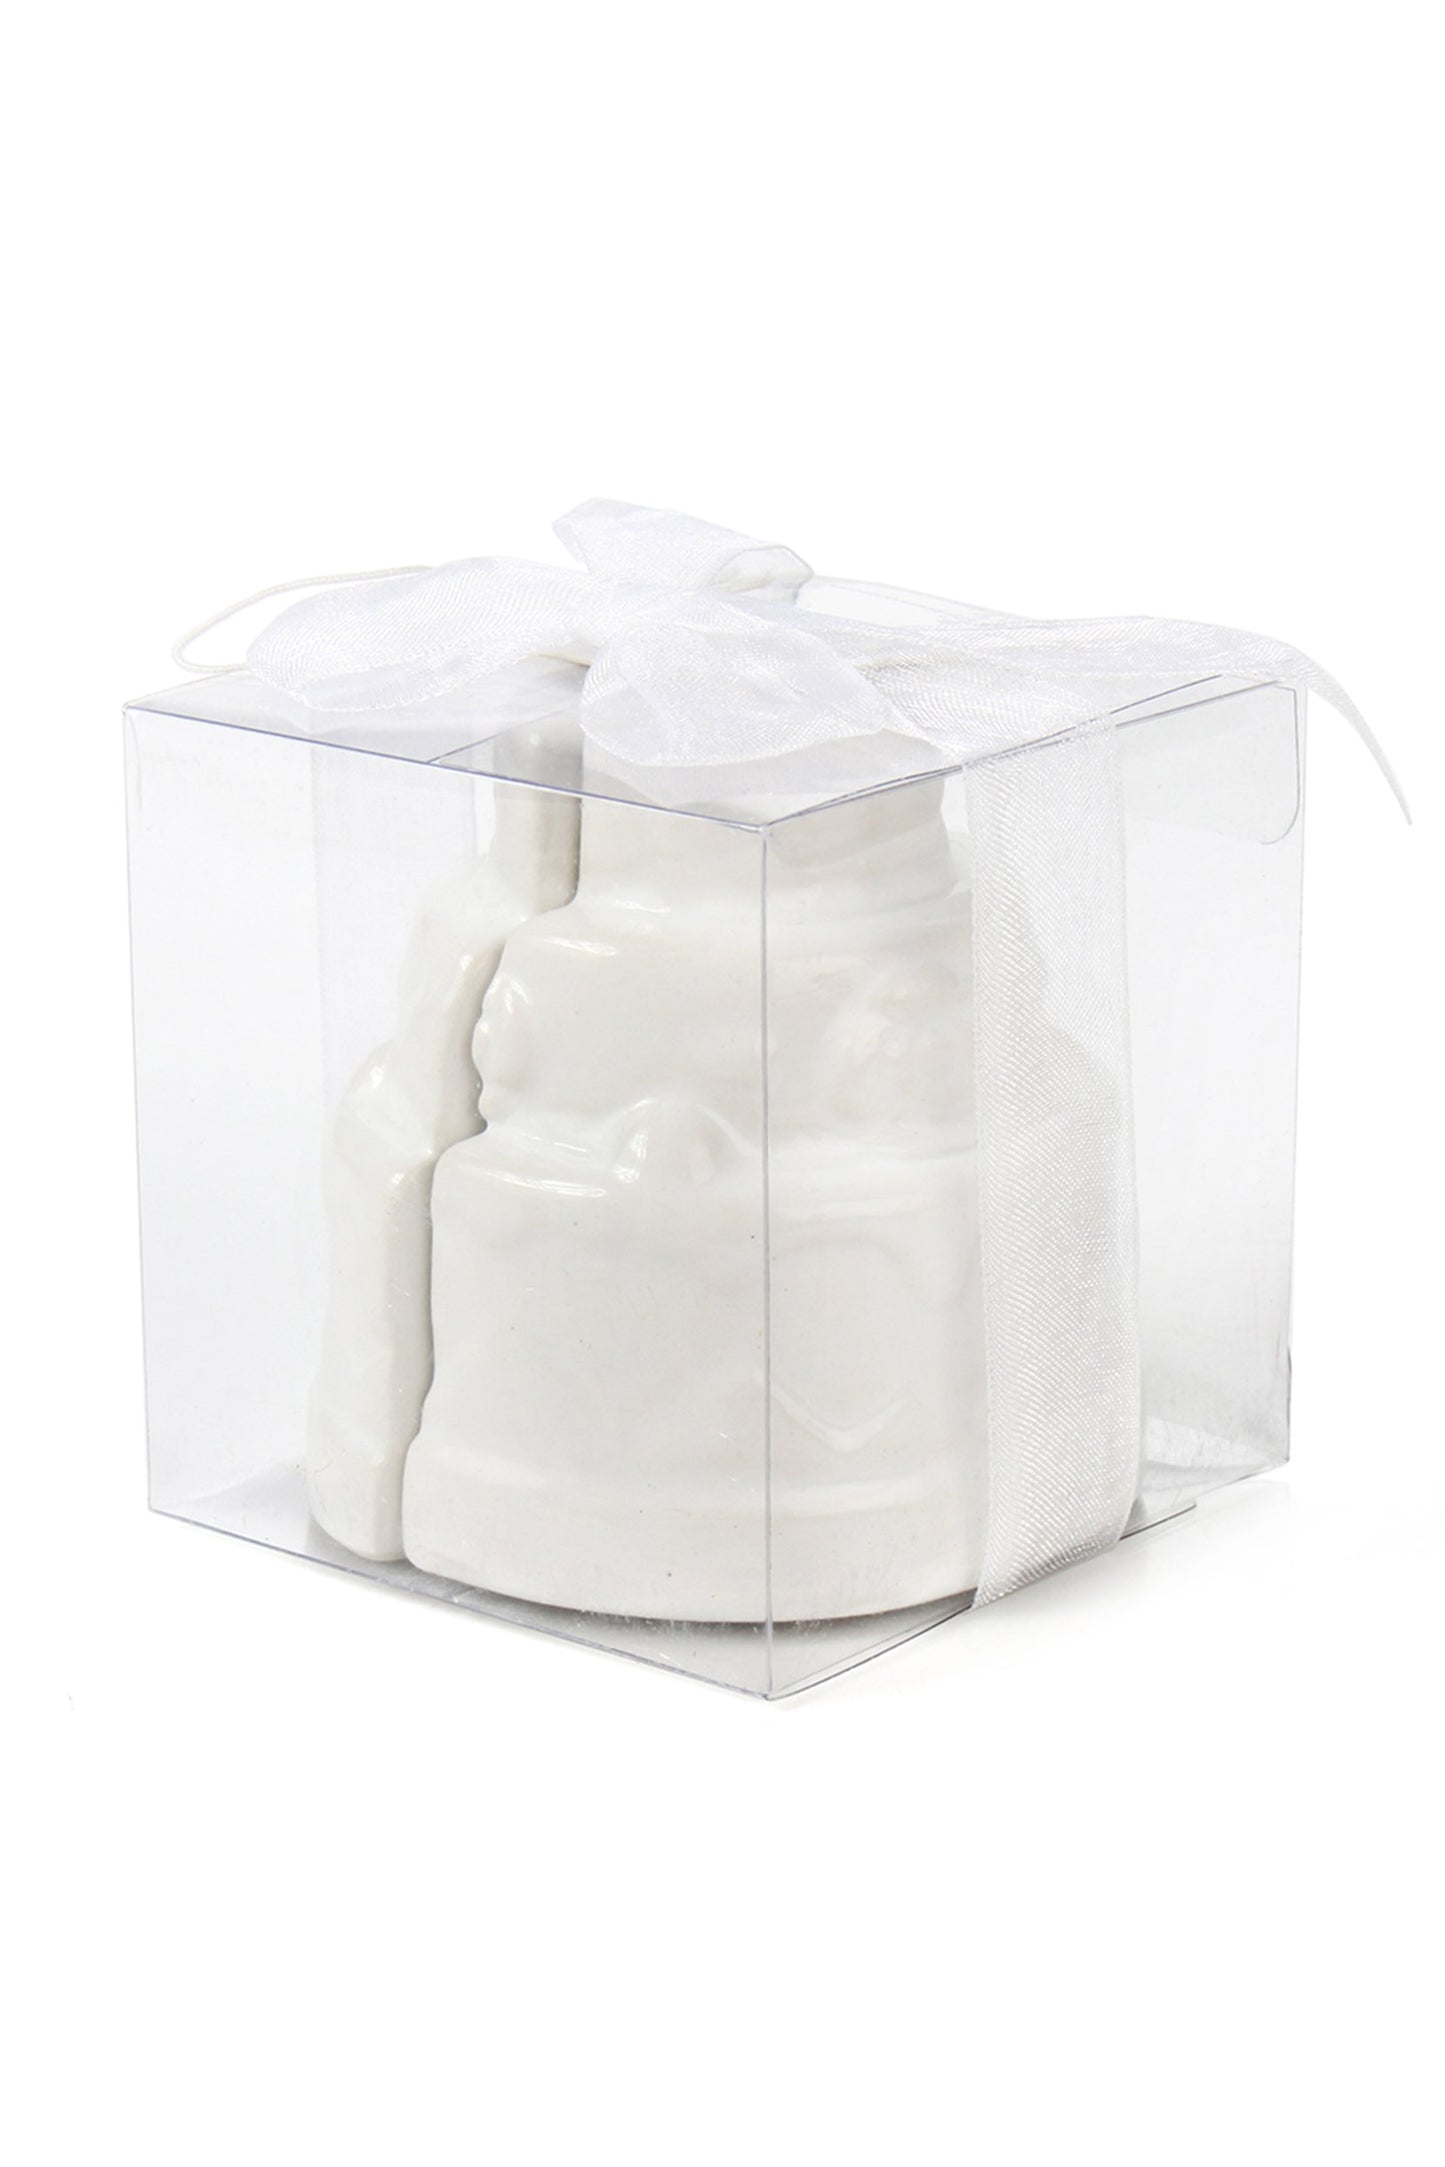 White Cake Salt and Pepper Shakers Set CGF0177 (Set of 6 pcs)